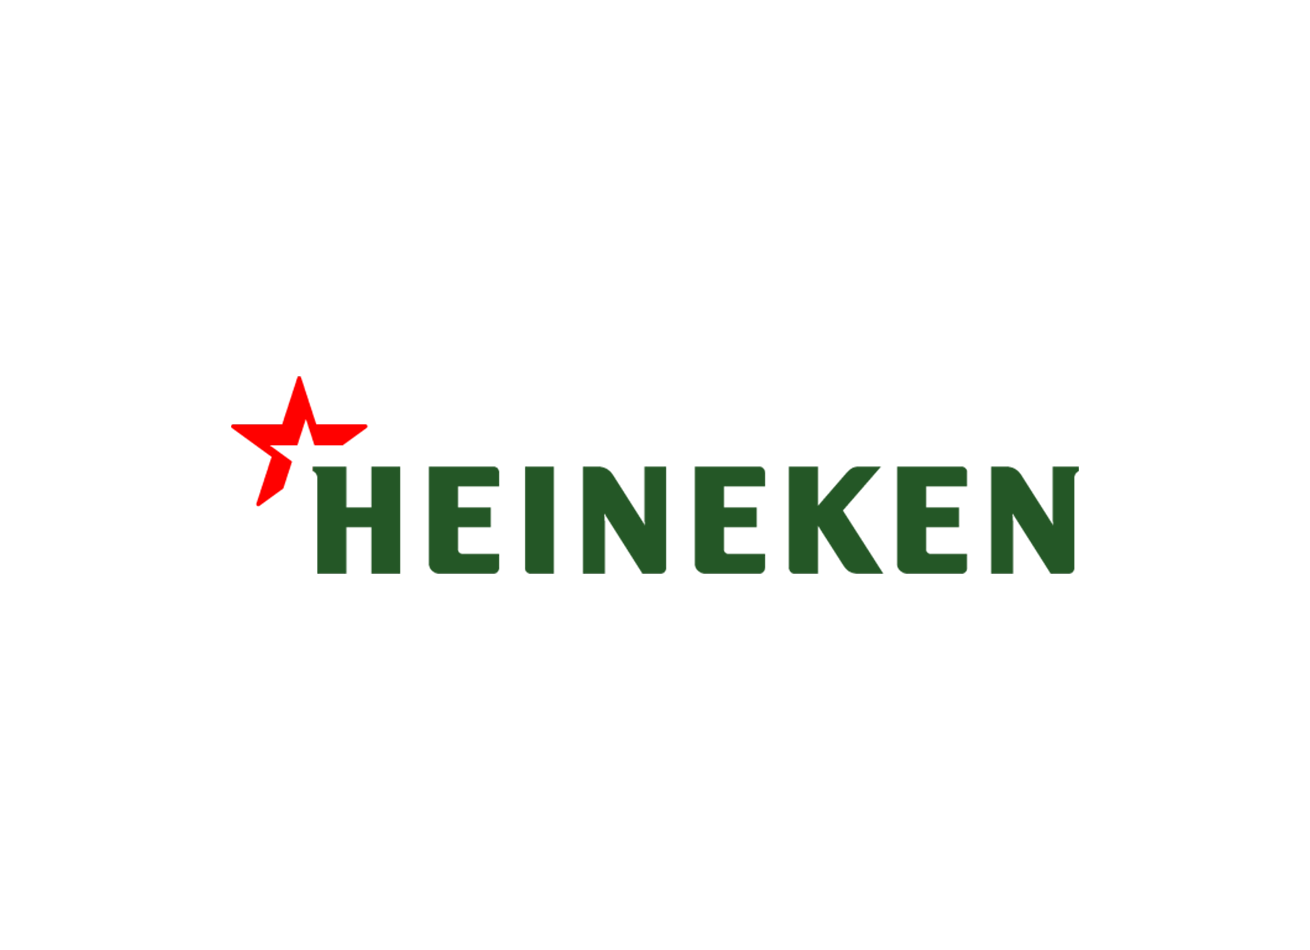 Web App Heineken